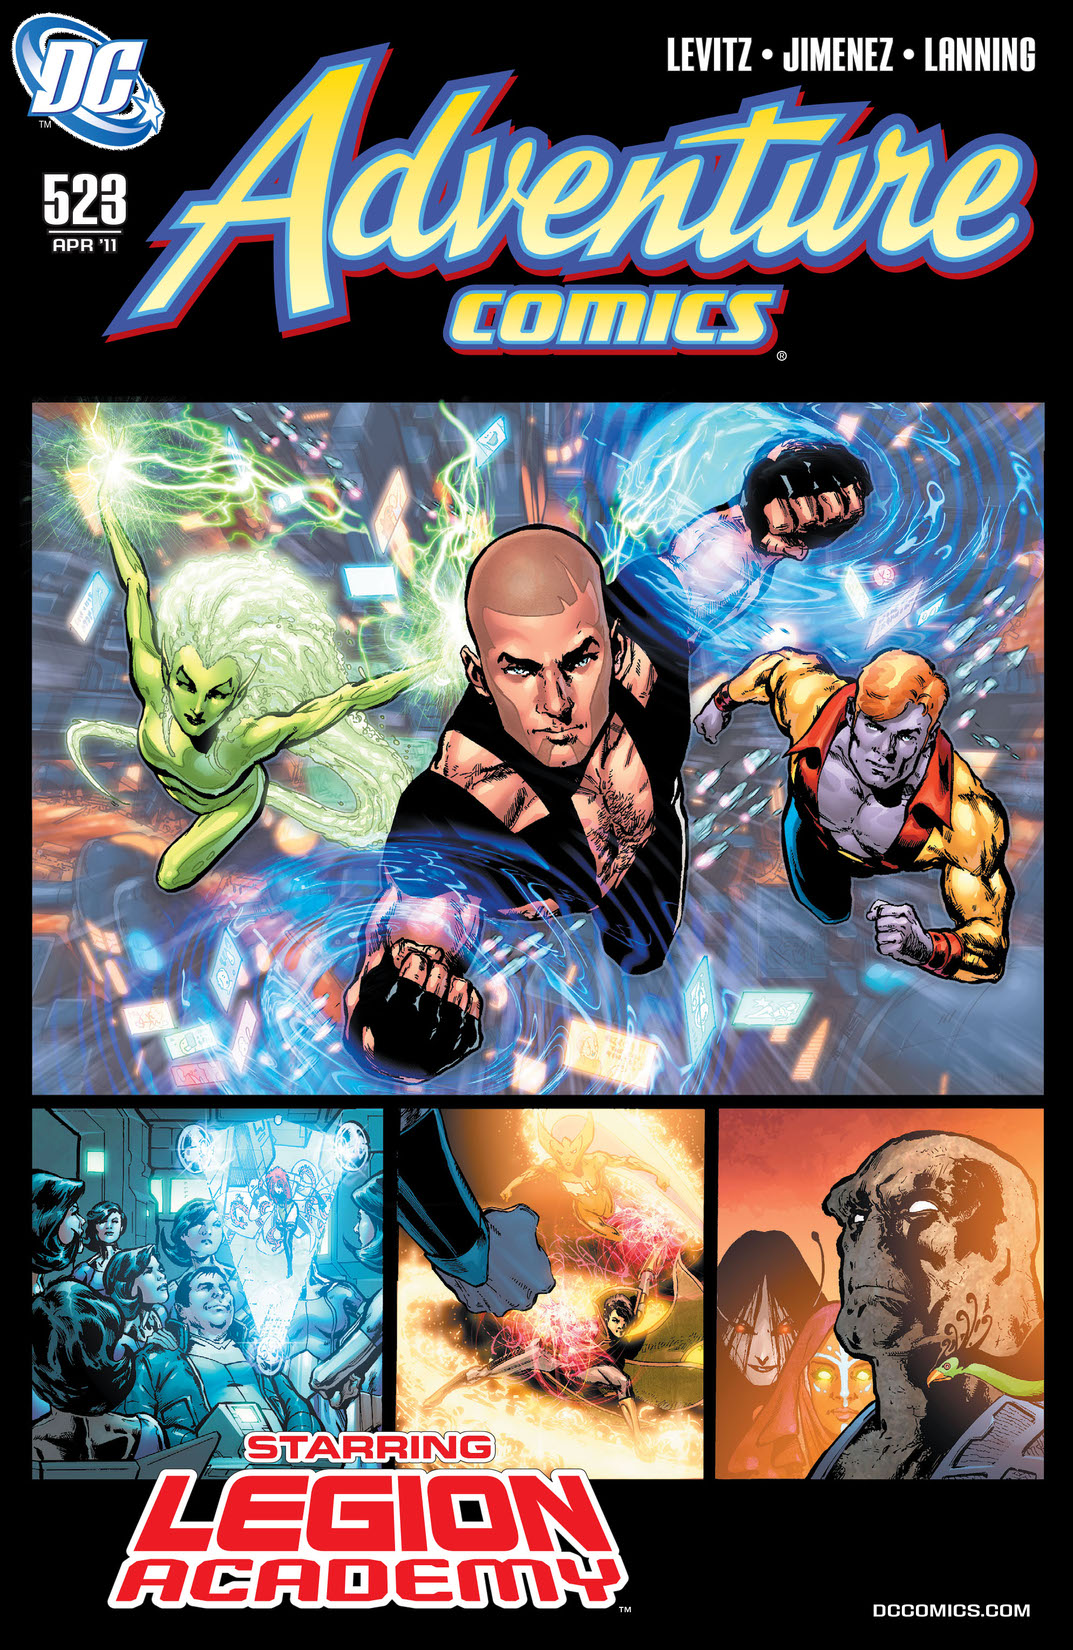 Adventure Comics (2009-) #523 preview images